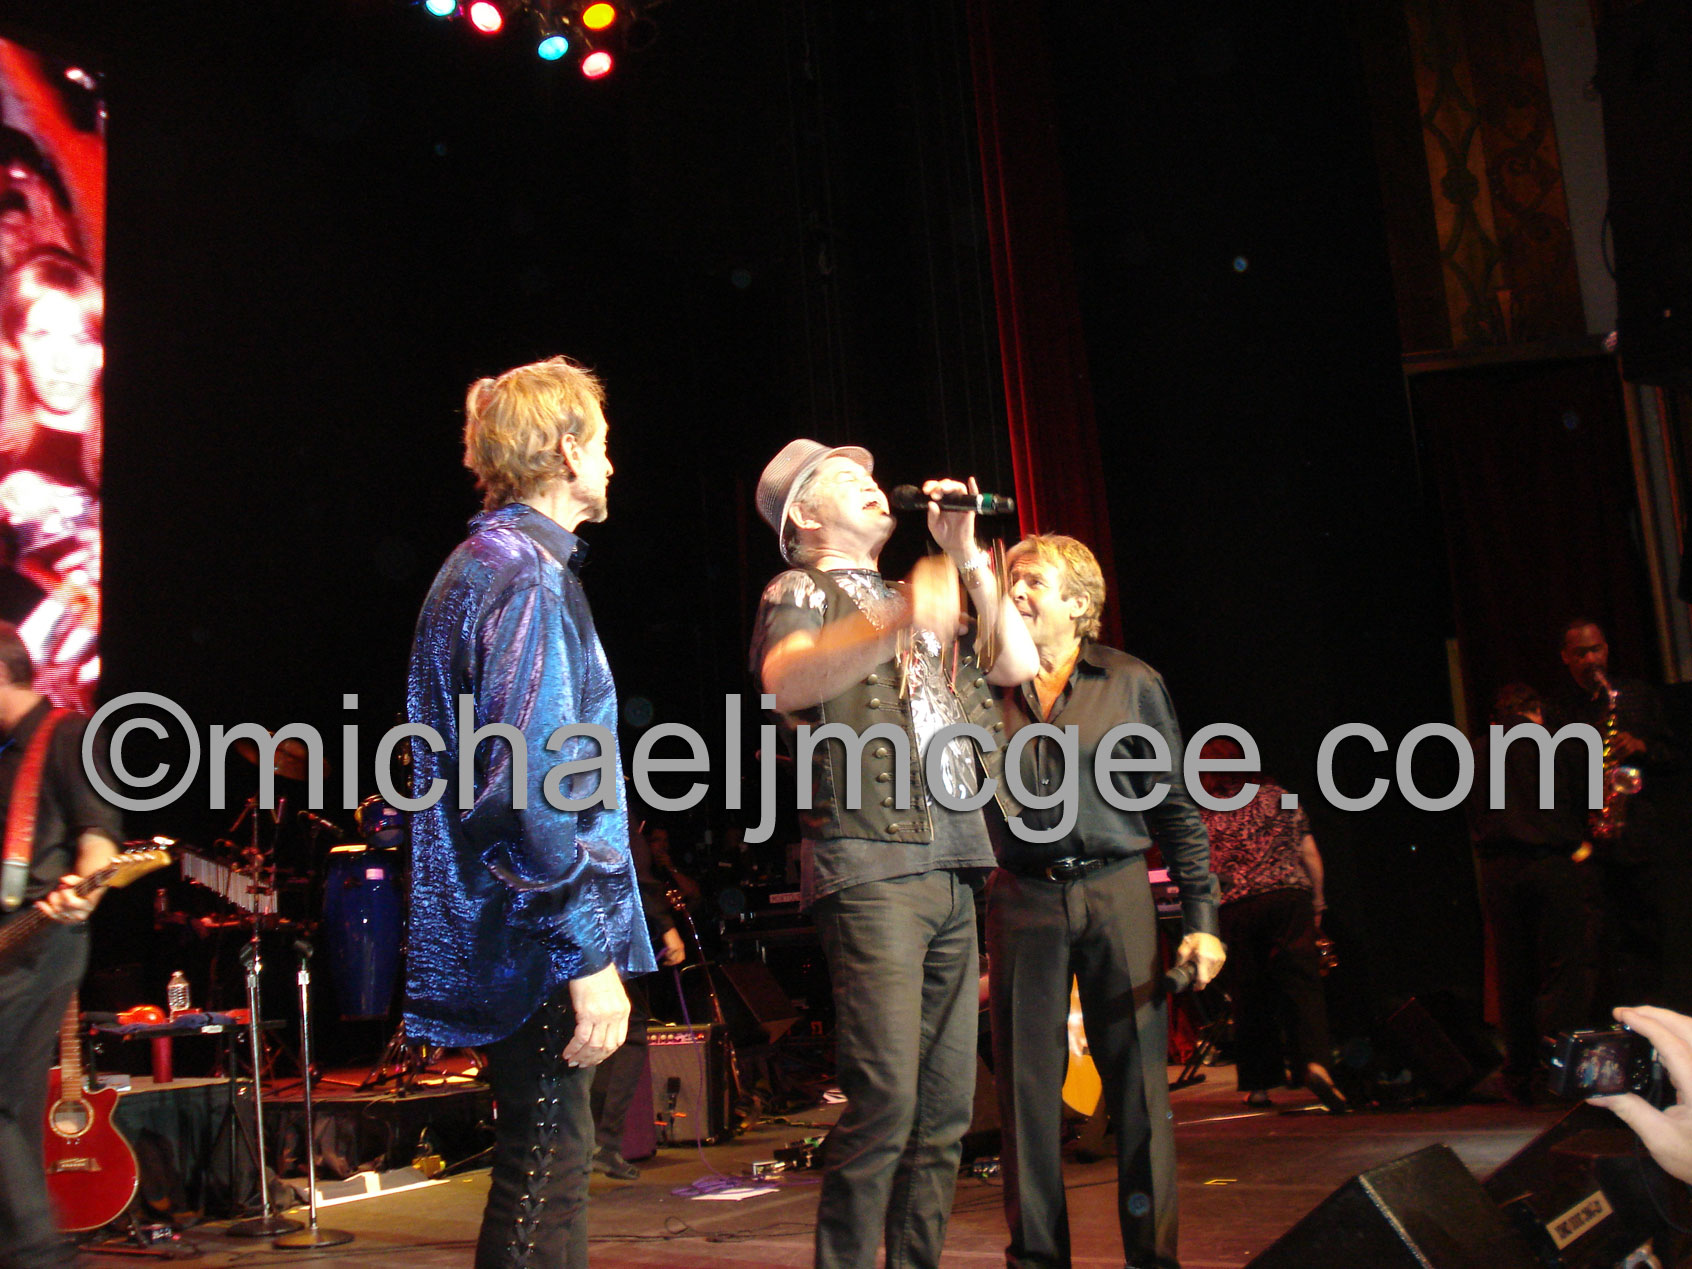 The Monkees / michaeljmcgee.com